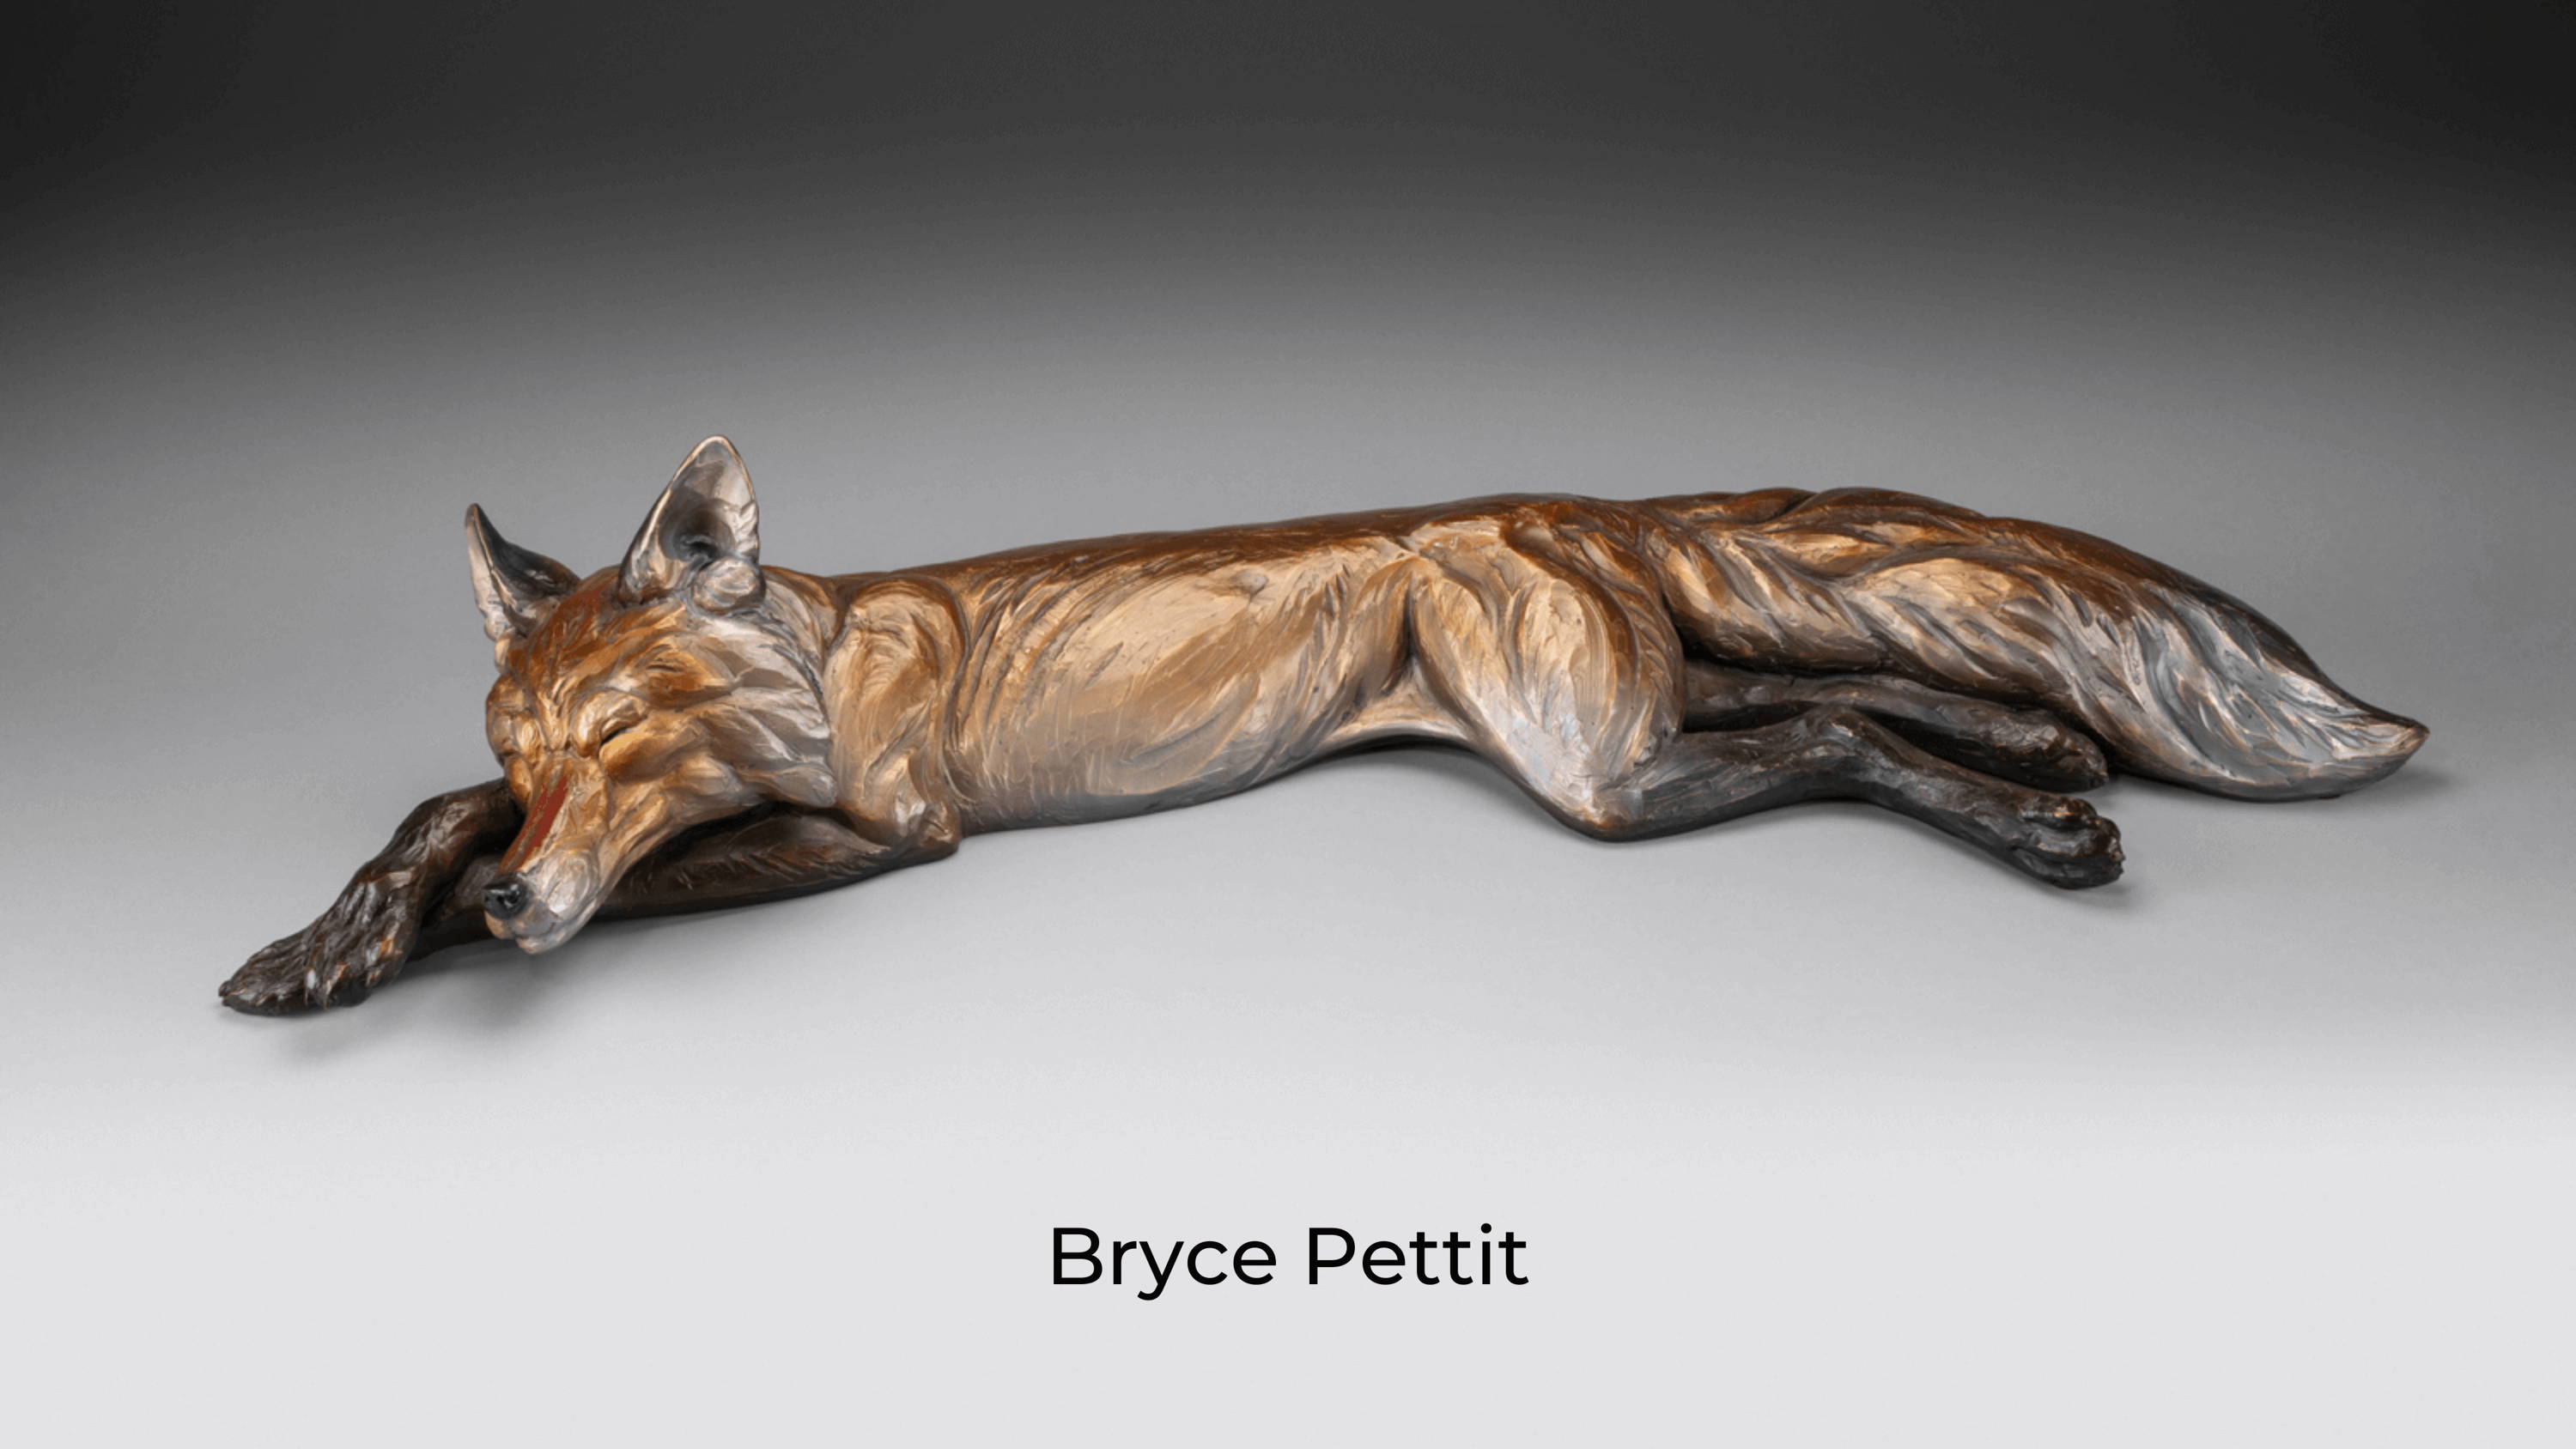 David Yarrow on sale. Bryce Pettit. Santa Fe Art Gallery. David Yarrow Photography. 